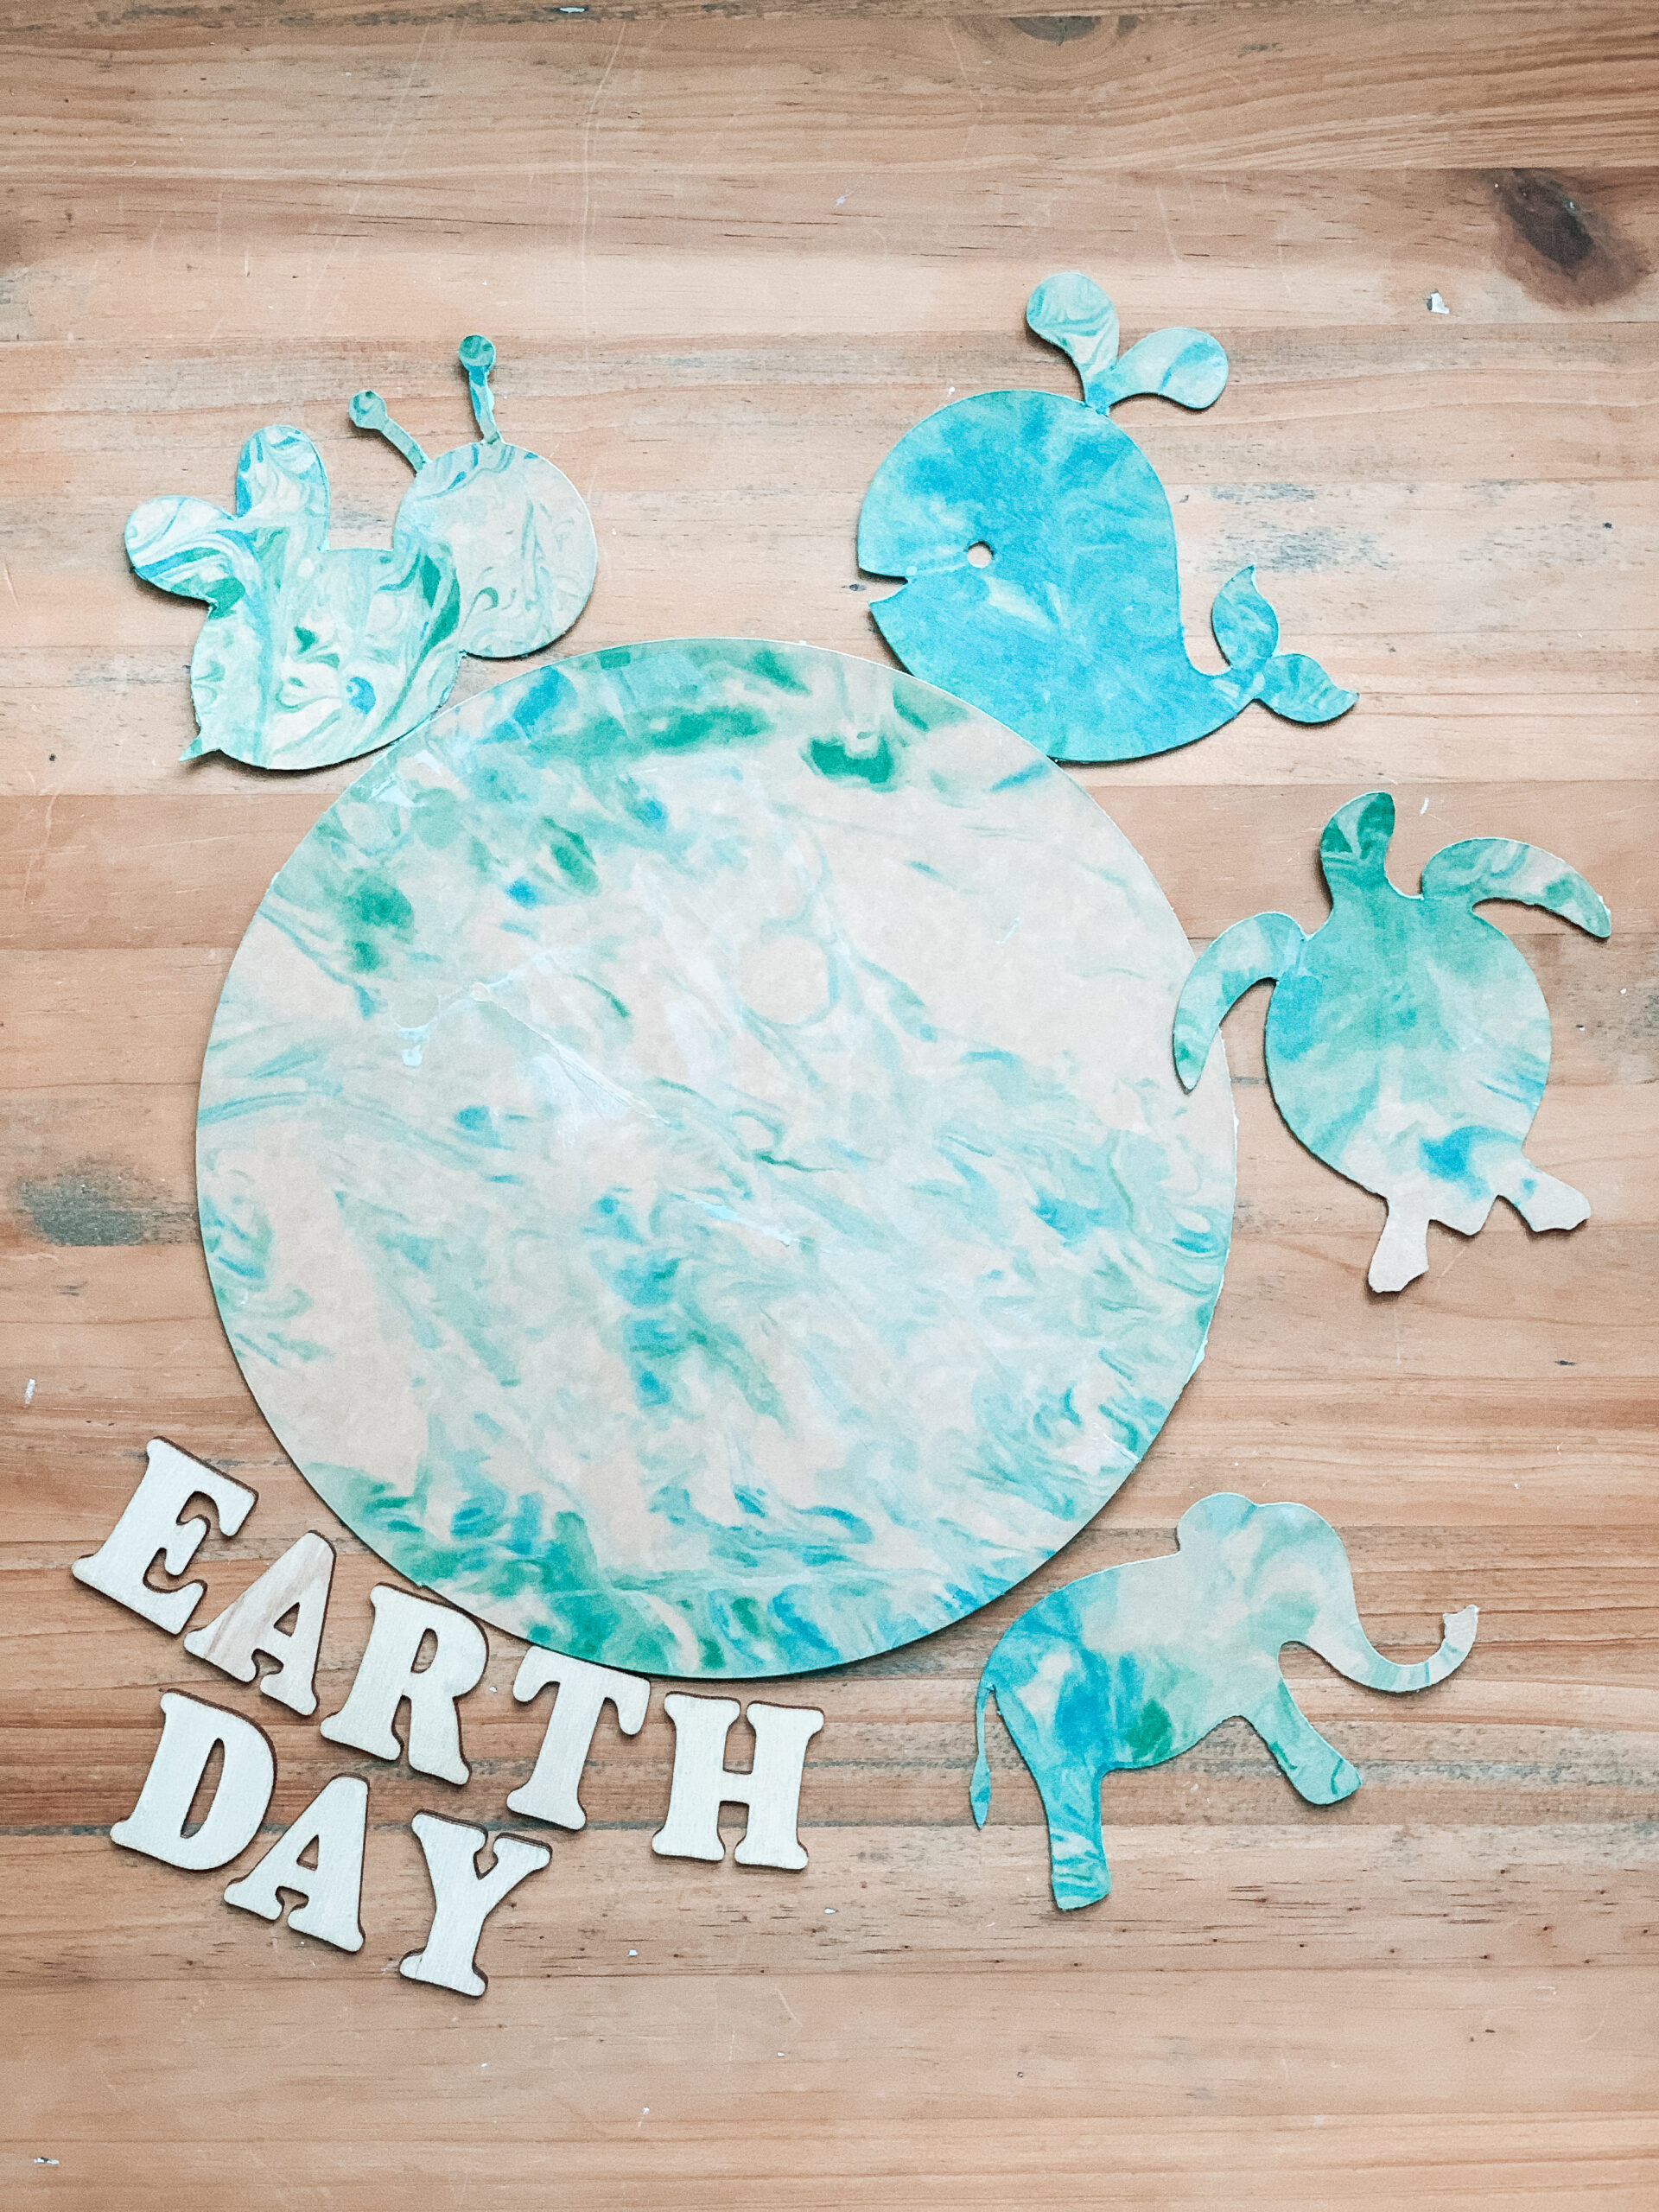 Earth Day shaving cream painting kids craft